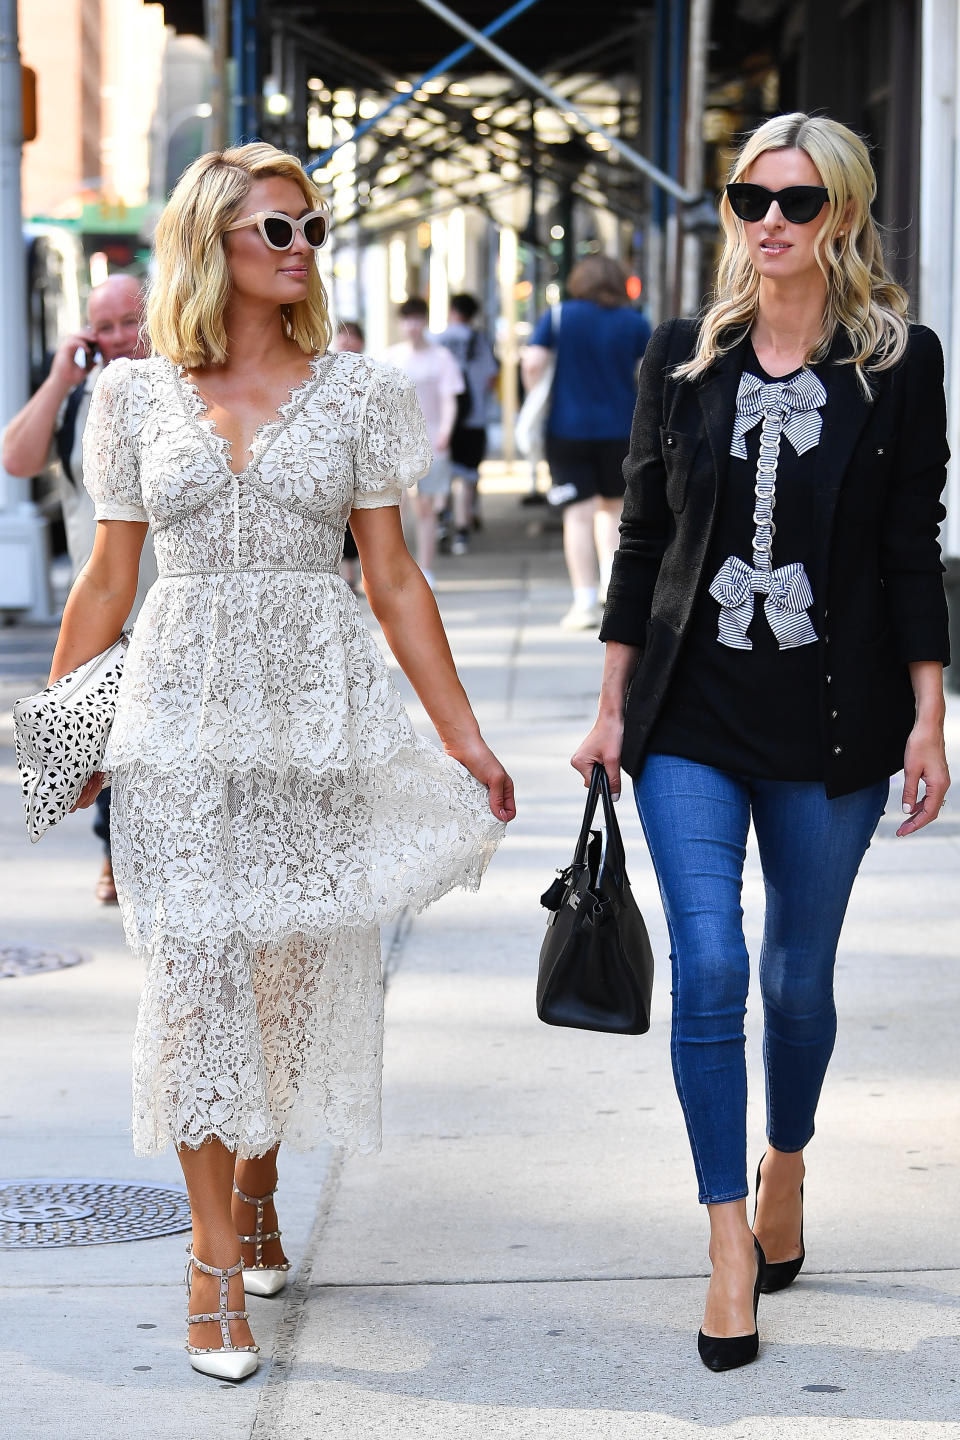 Paris and Nicky Hilton walk the streets of Broadway in New York City. - Credit: Robert O'Neil / SplashNews.com